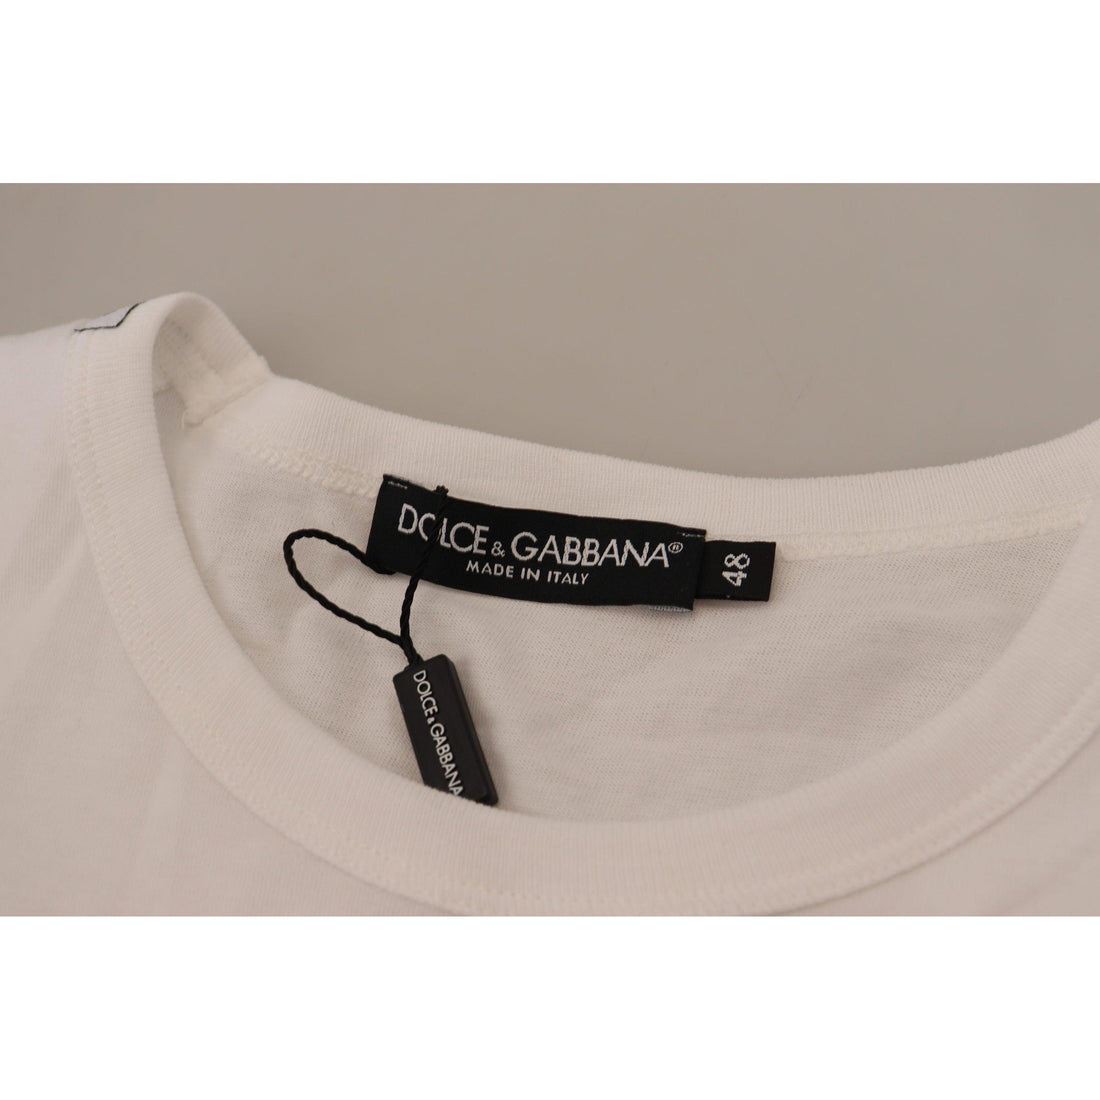 Dolce & Gabbana Elegant White Cotton Tee with DG Chest Pocket